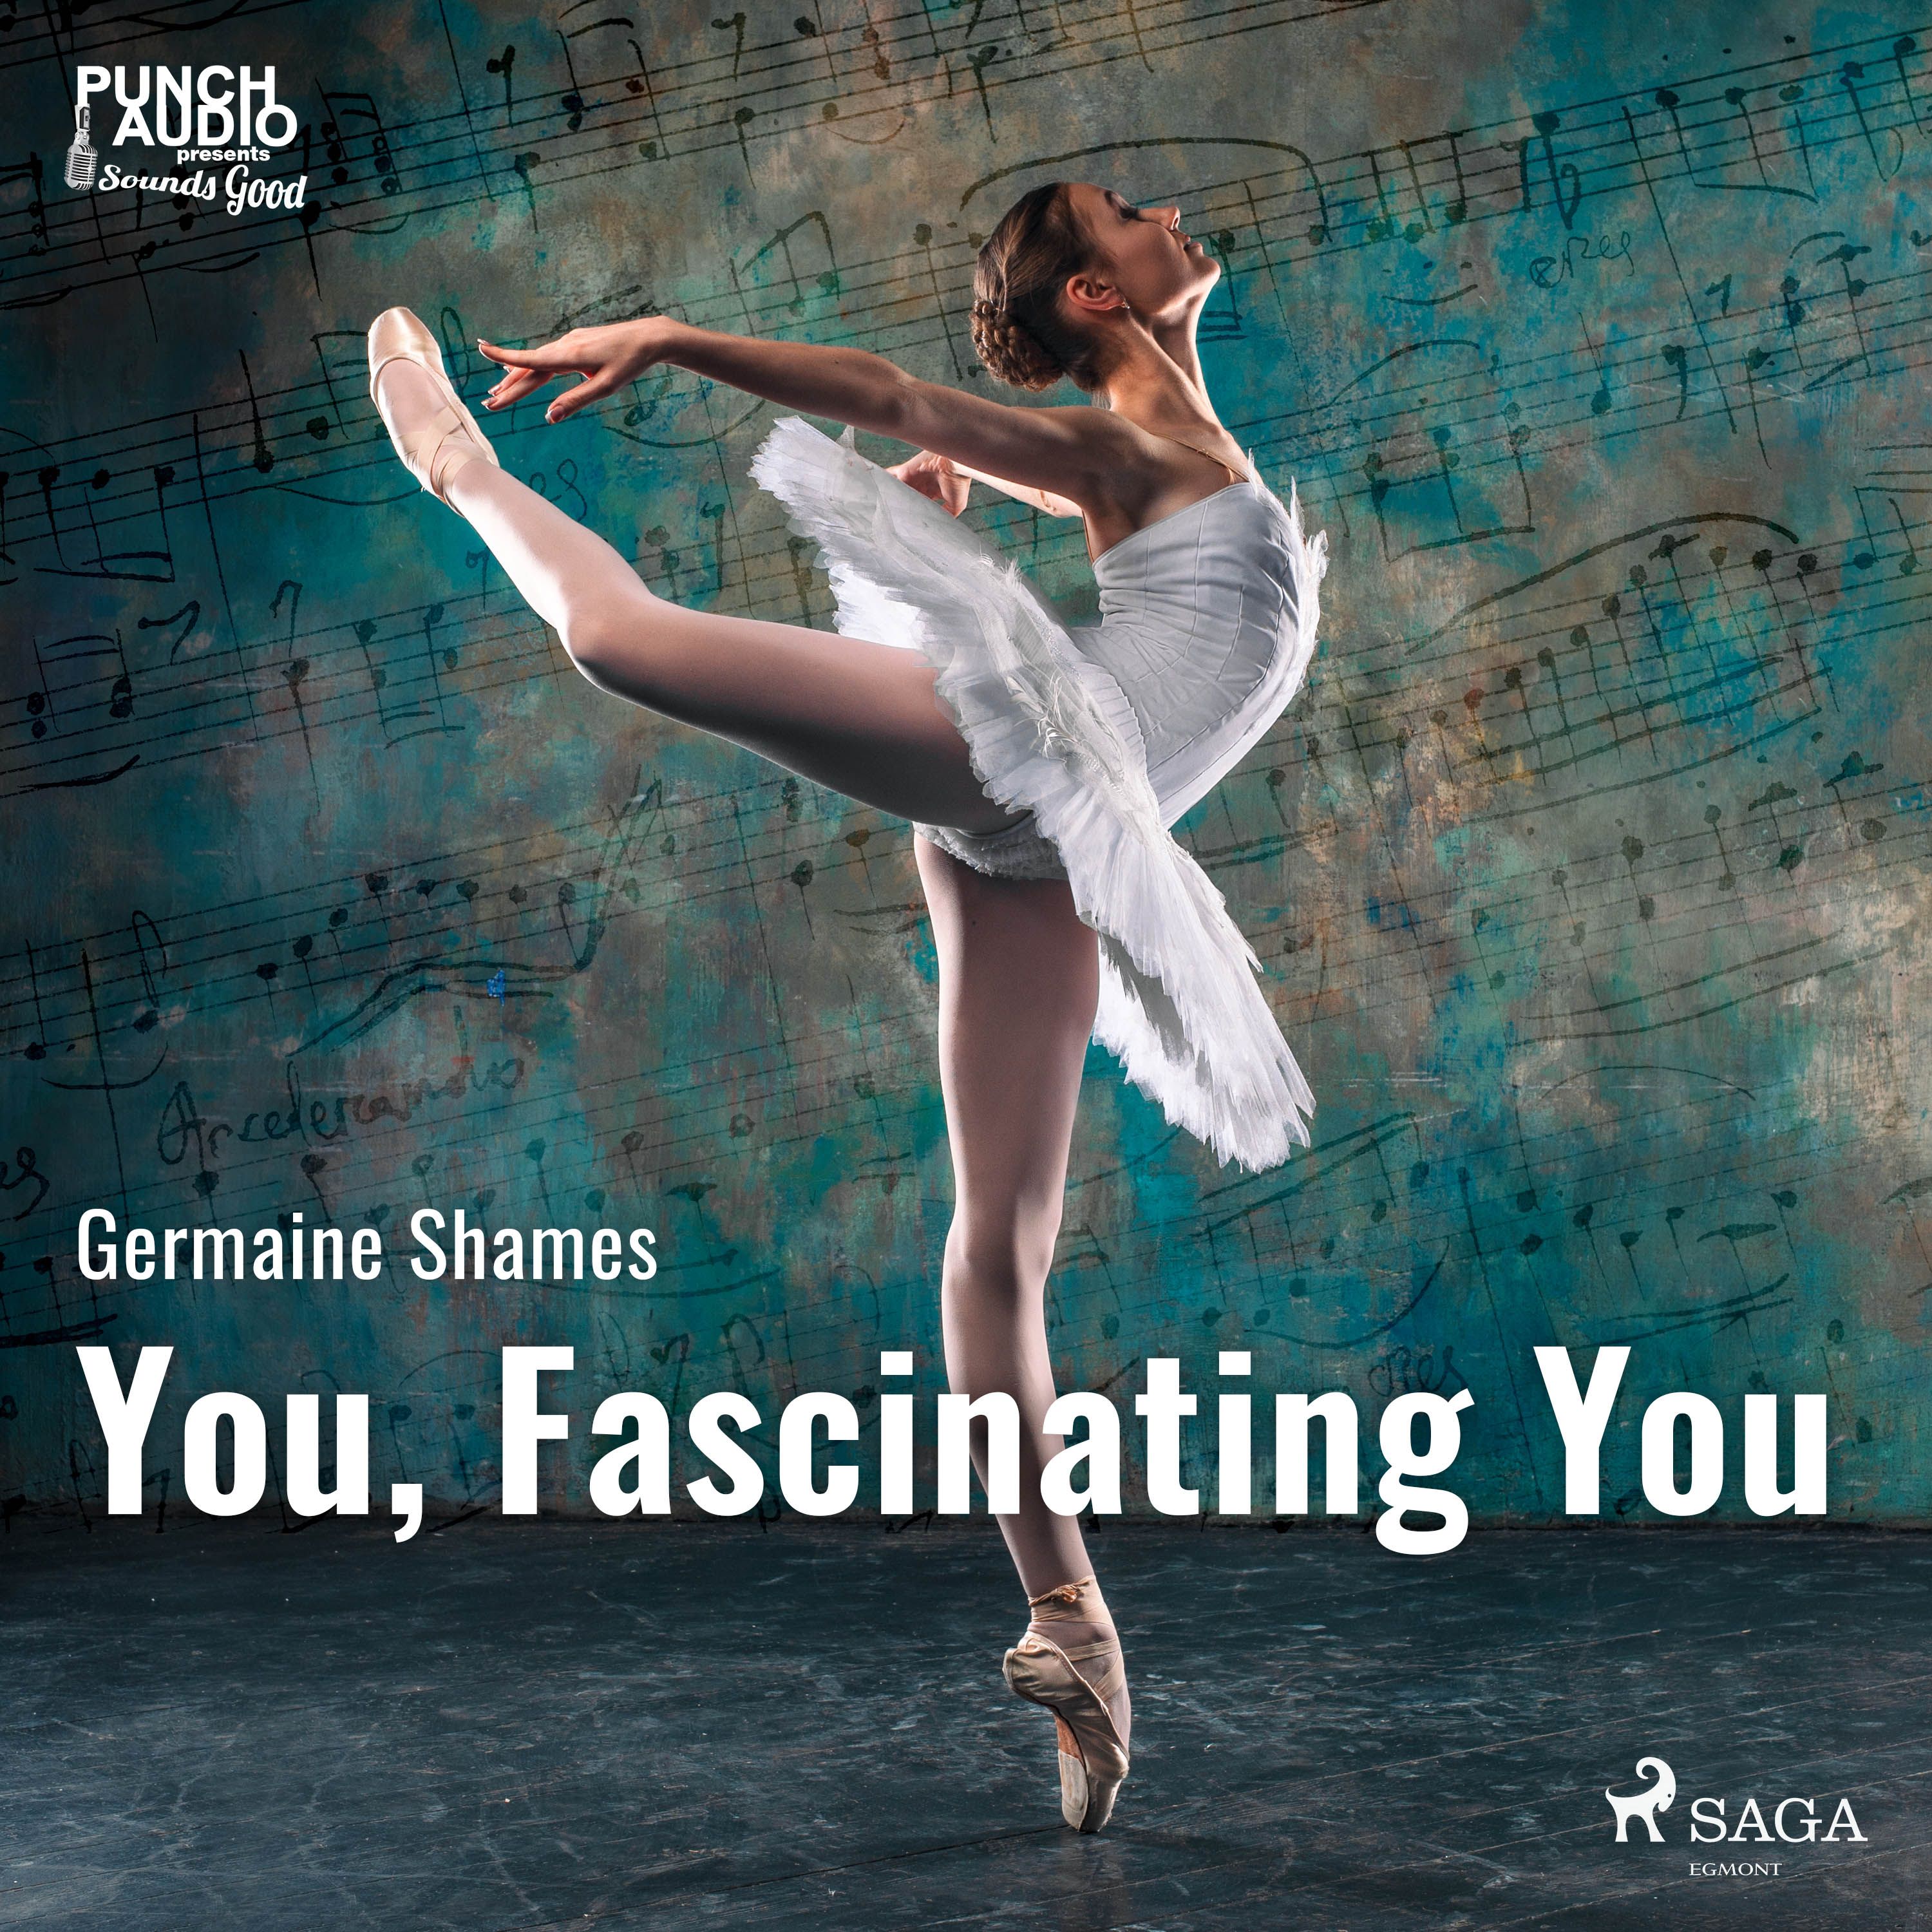 You, Fascinating You, ljudbok av Germaine Shames